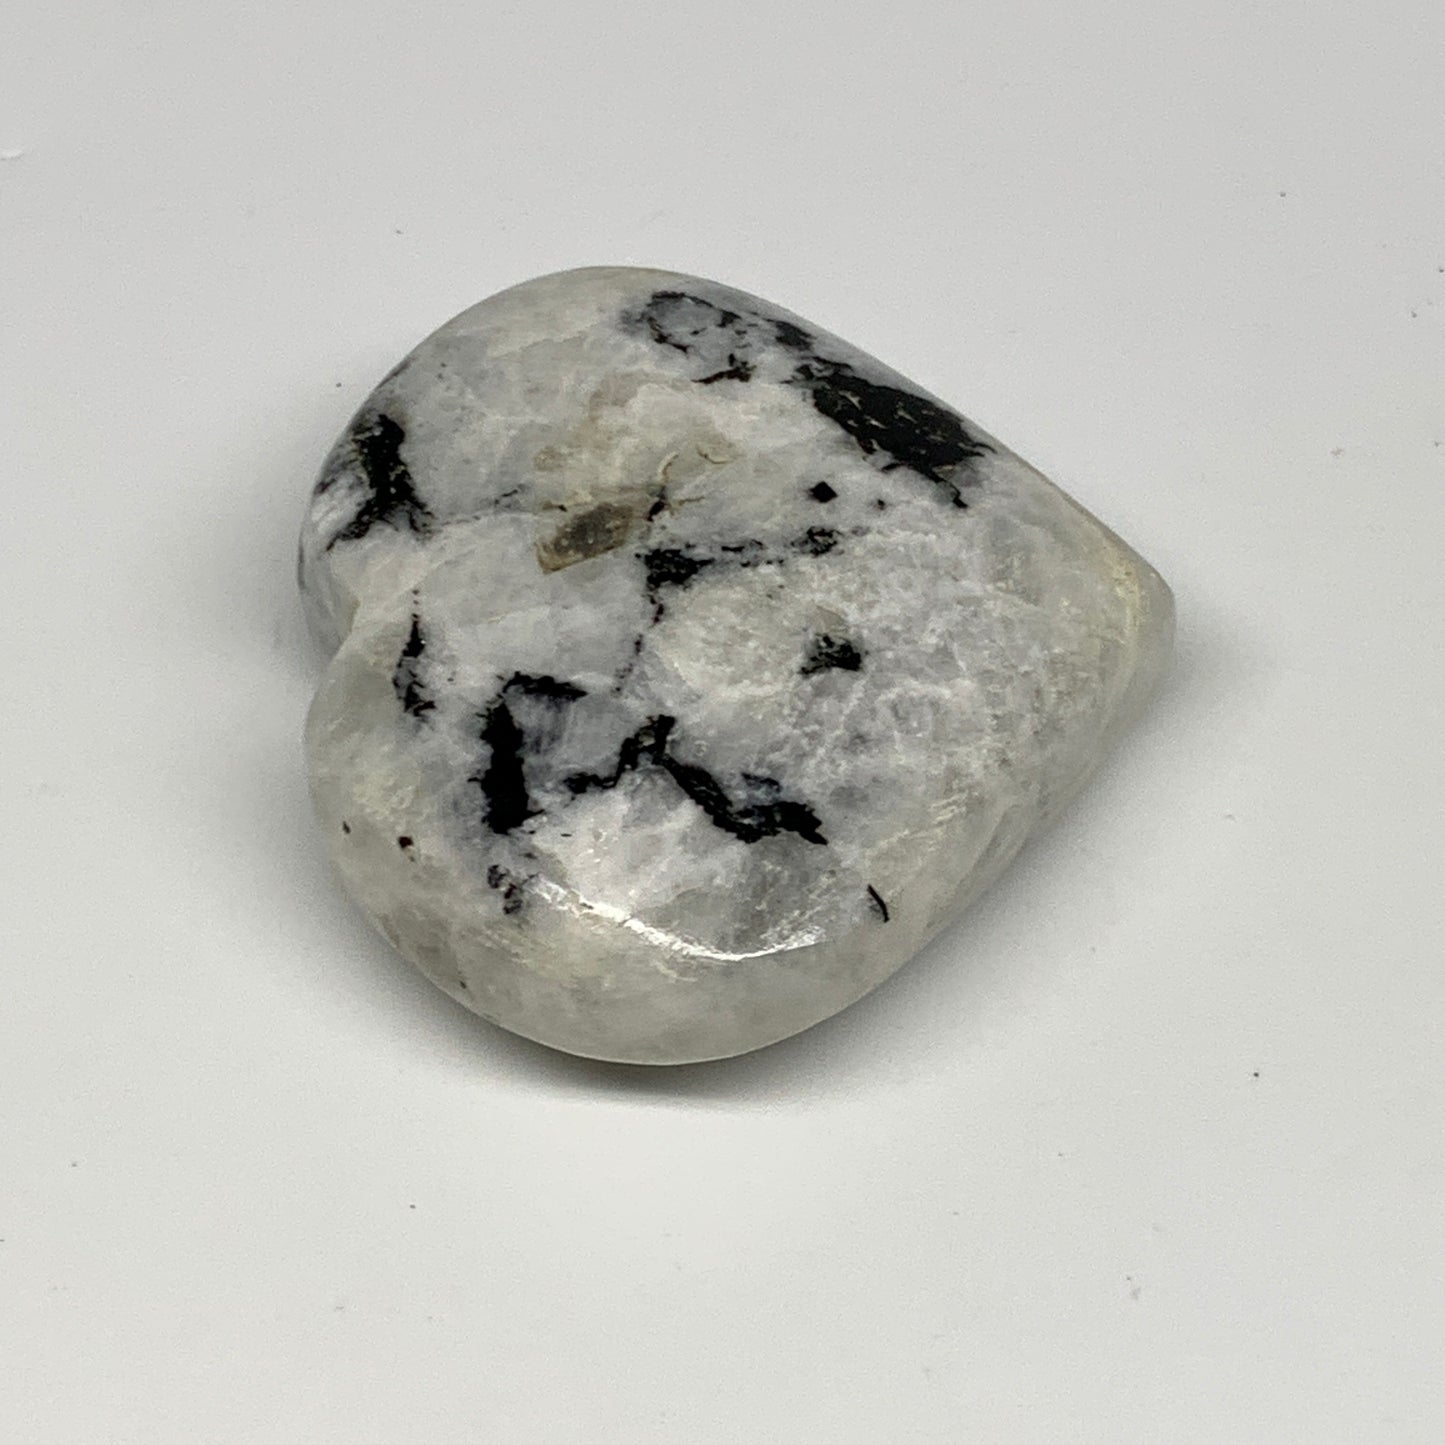 150.5g, 2.5"x2.7"x1", Rainbow Moonstone Heart Crystal Gemstone @India, B29756